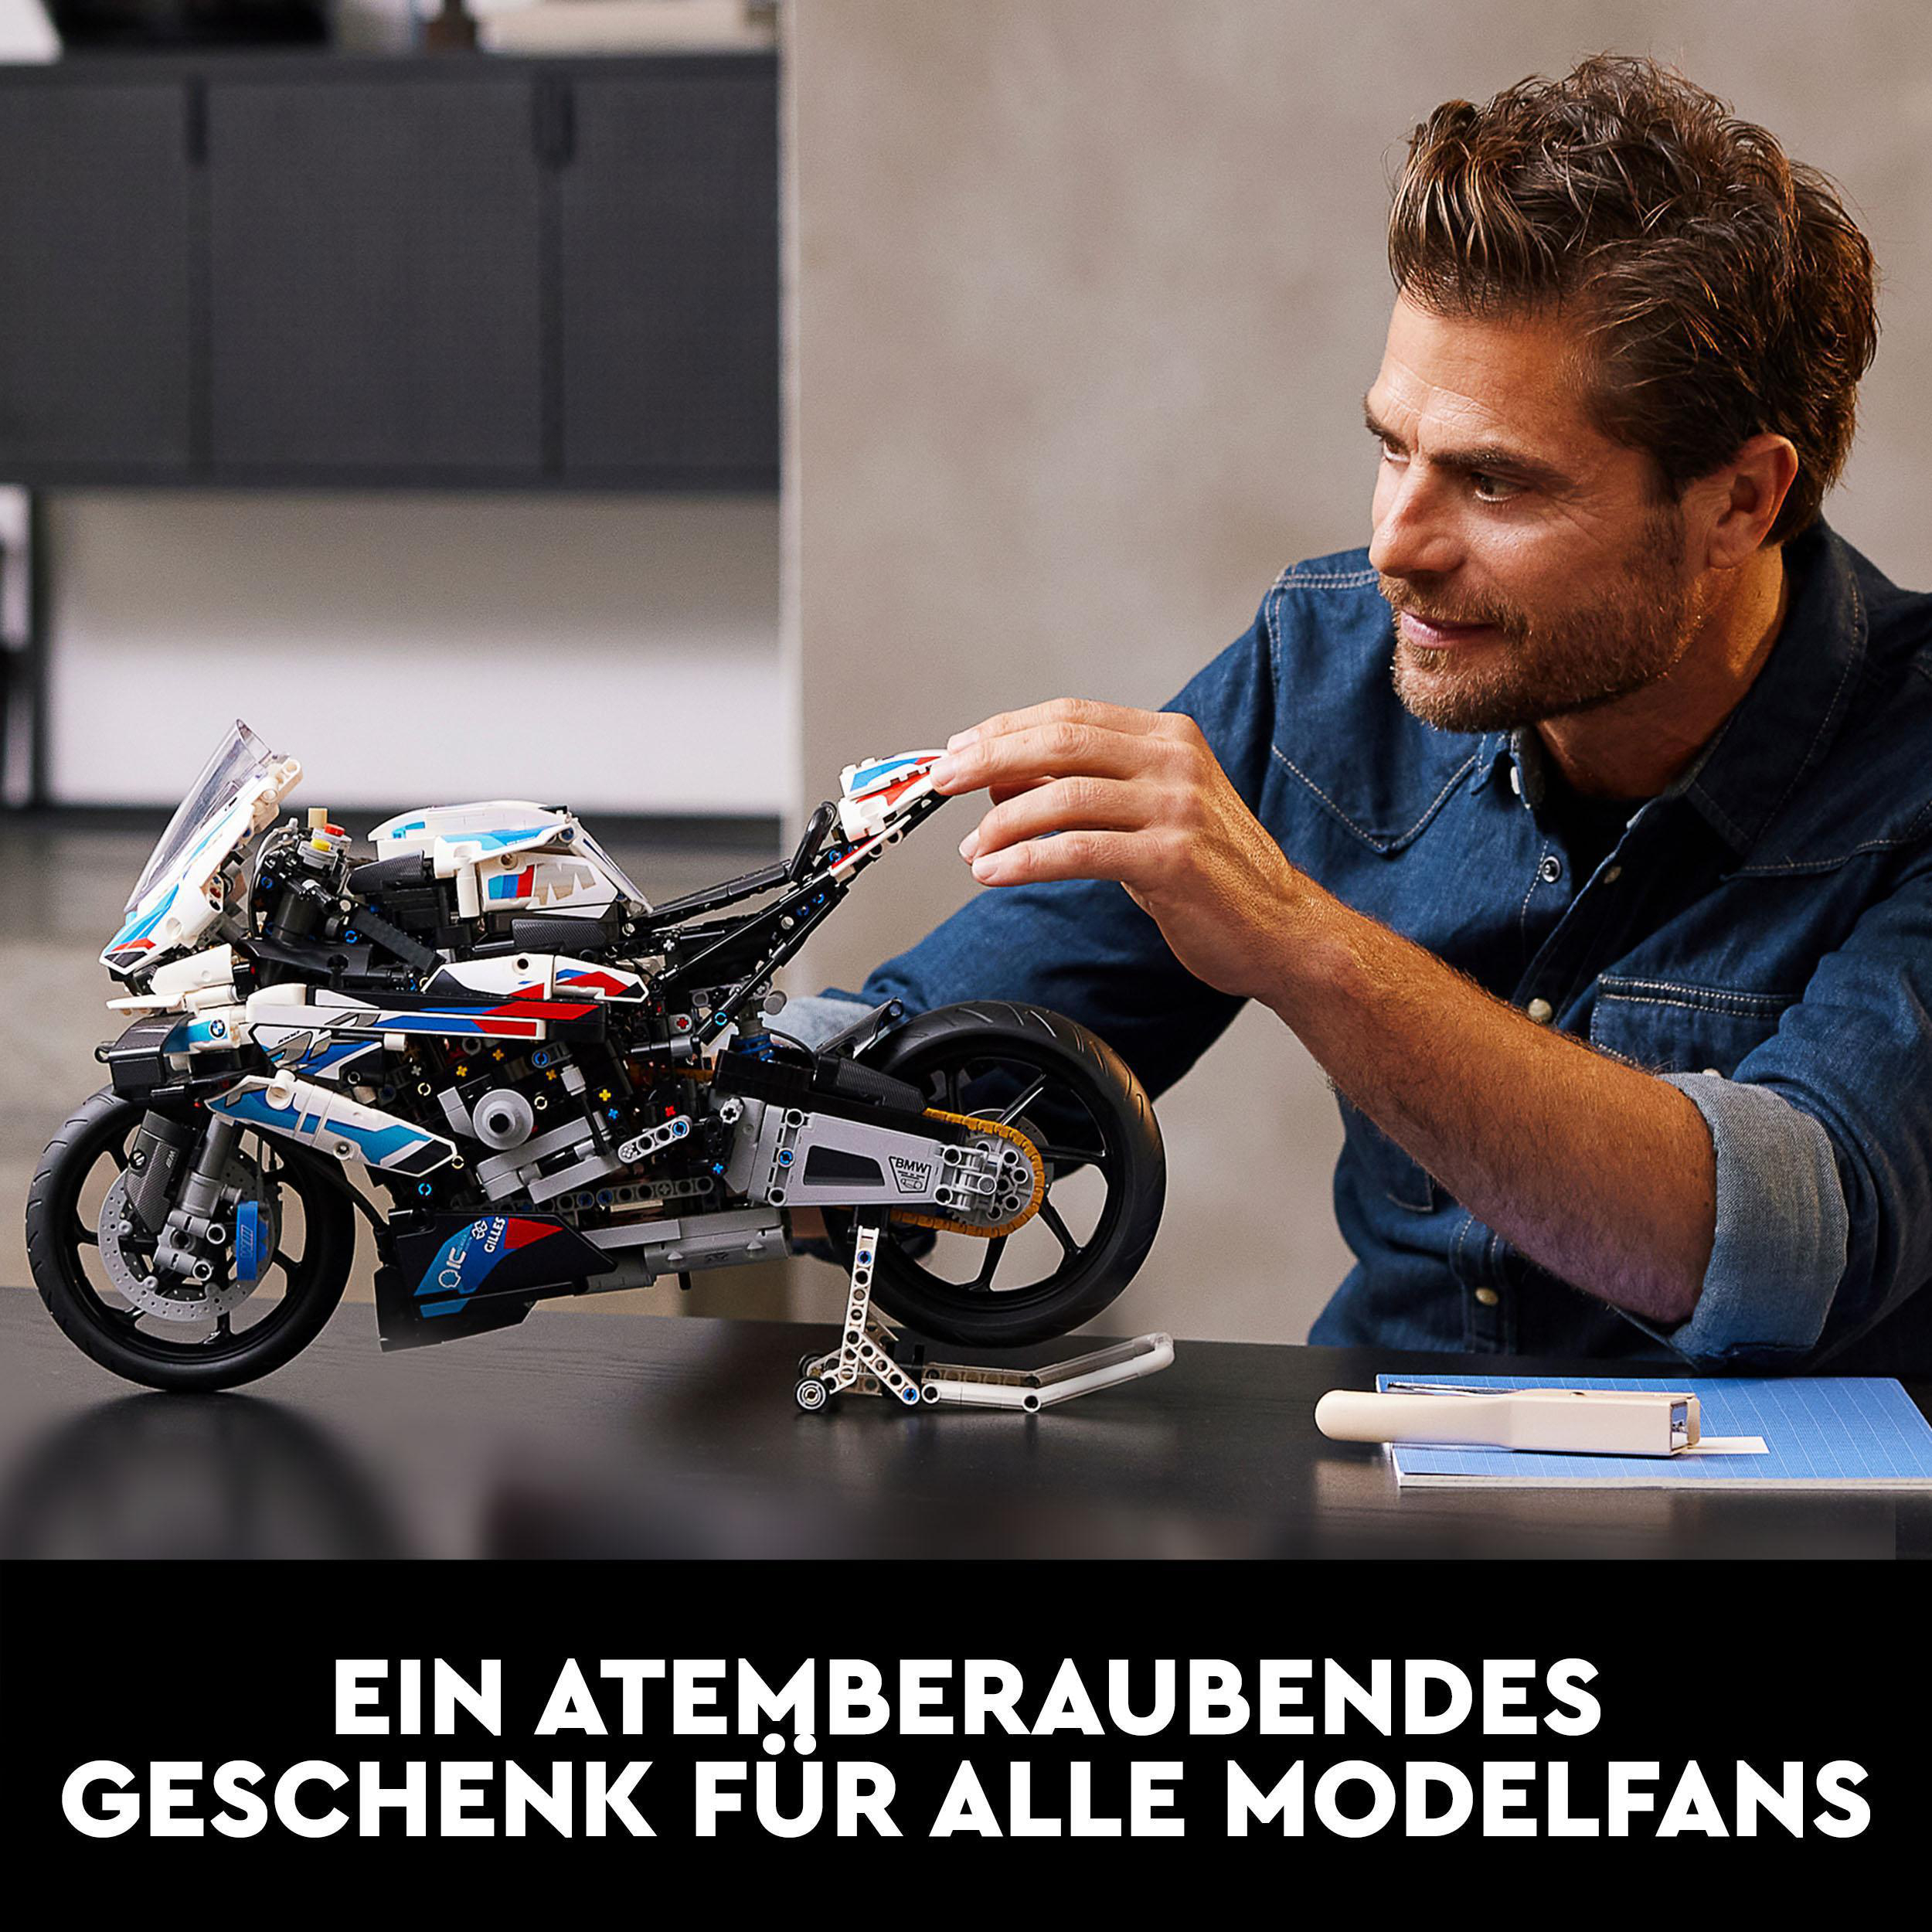 LEGO Technic Mehrfarbig BMW 42130 Bausatz, 1000 RR M